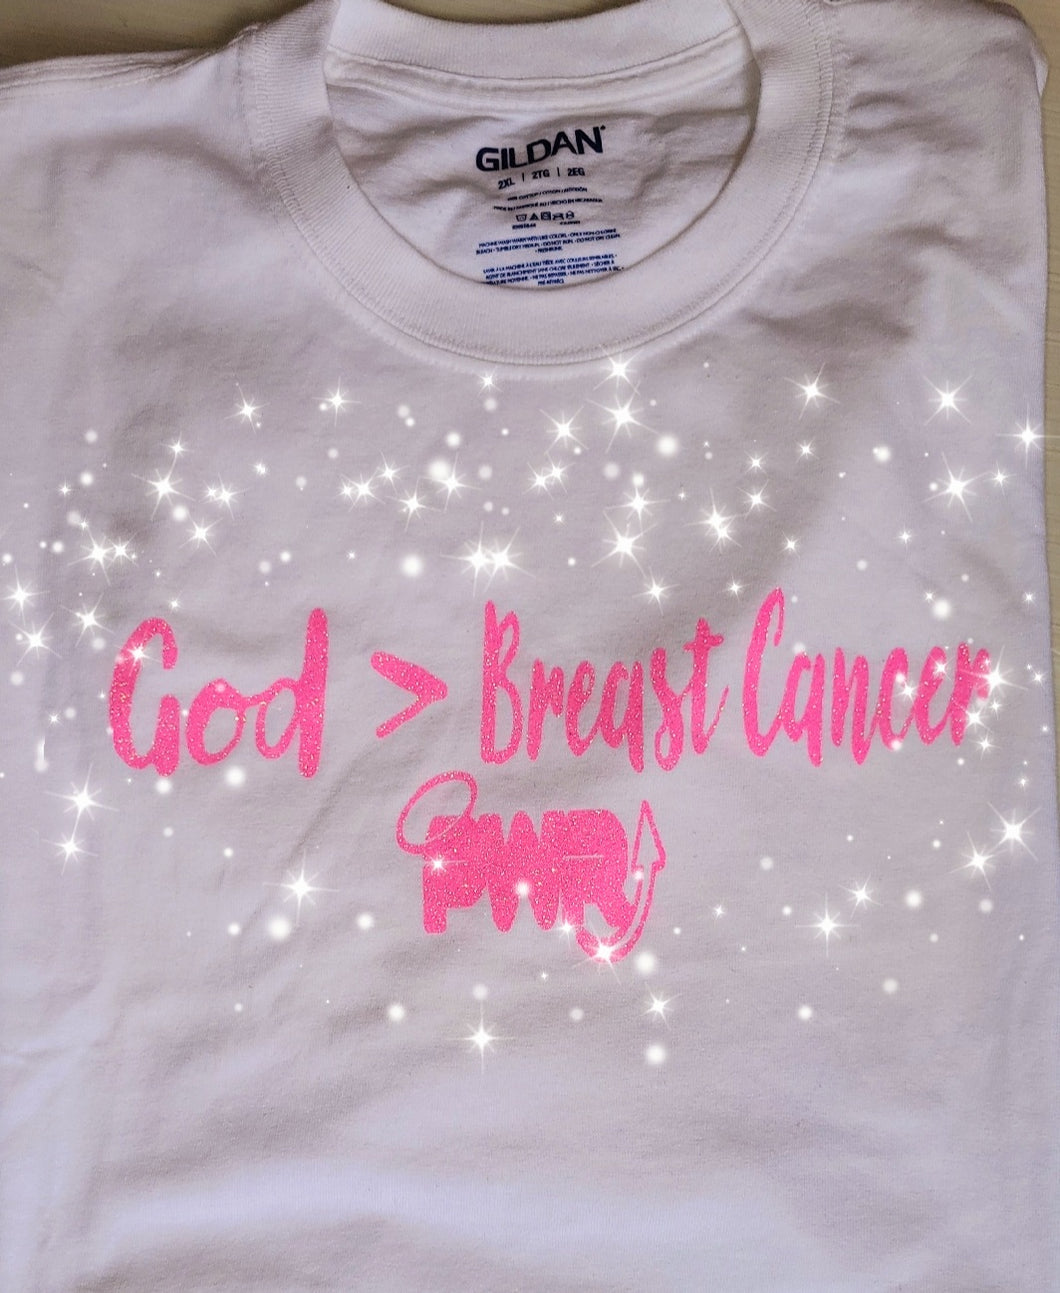 God > Breast Cancer